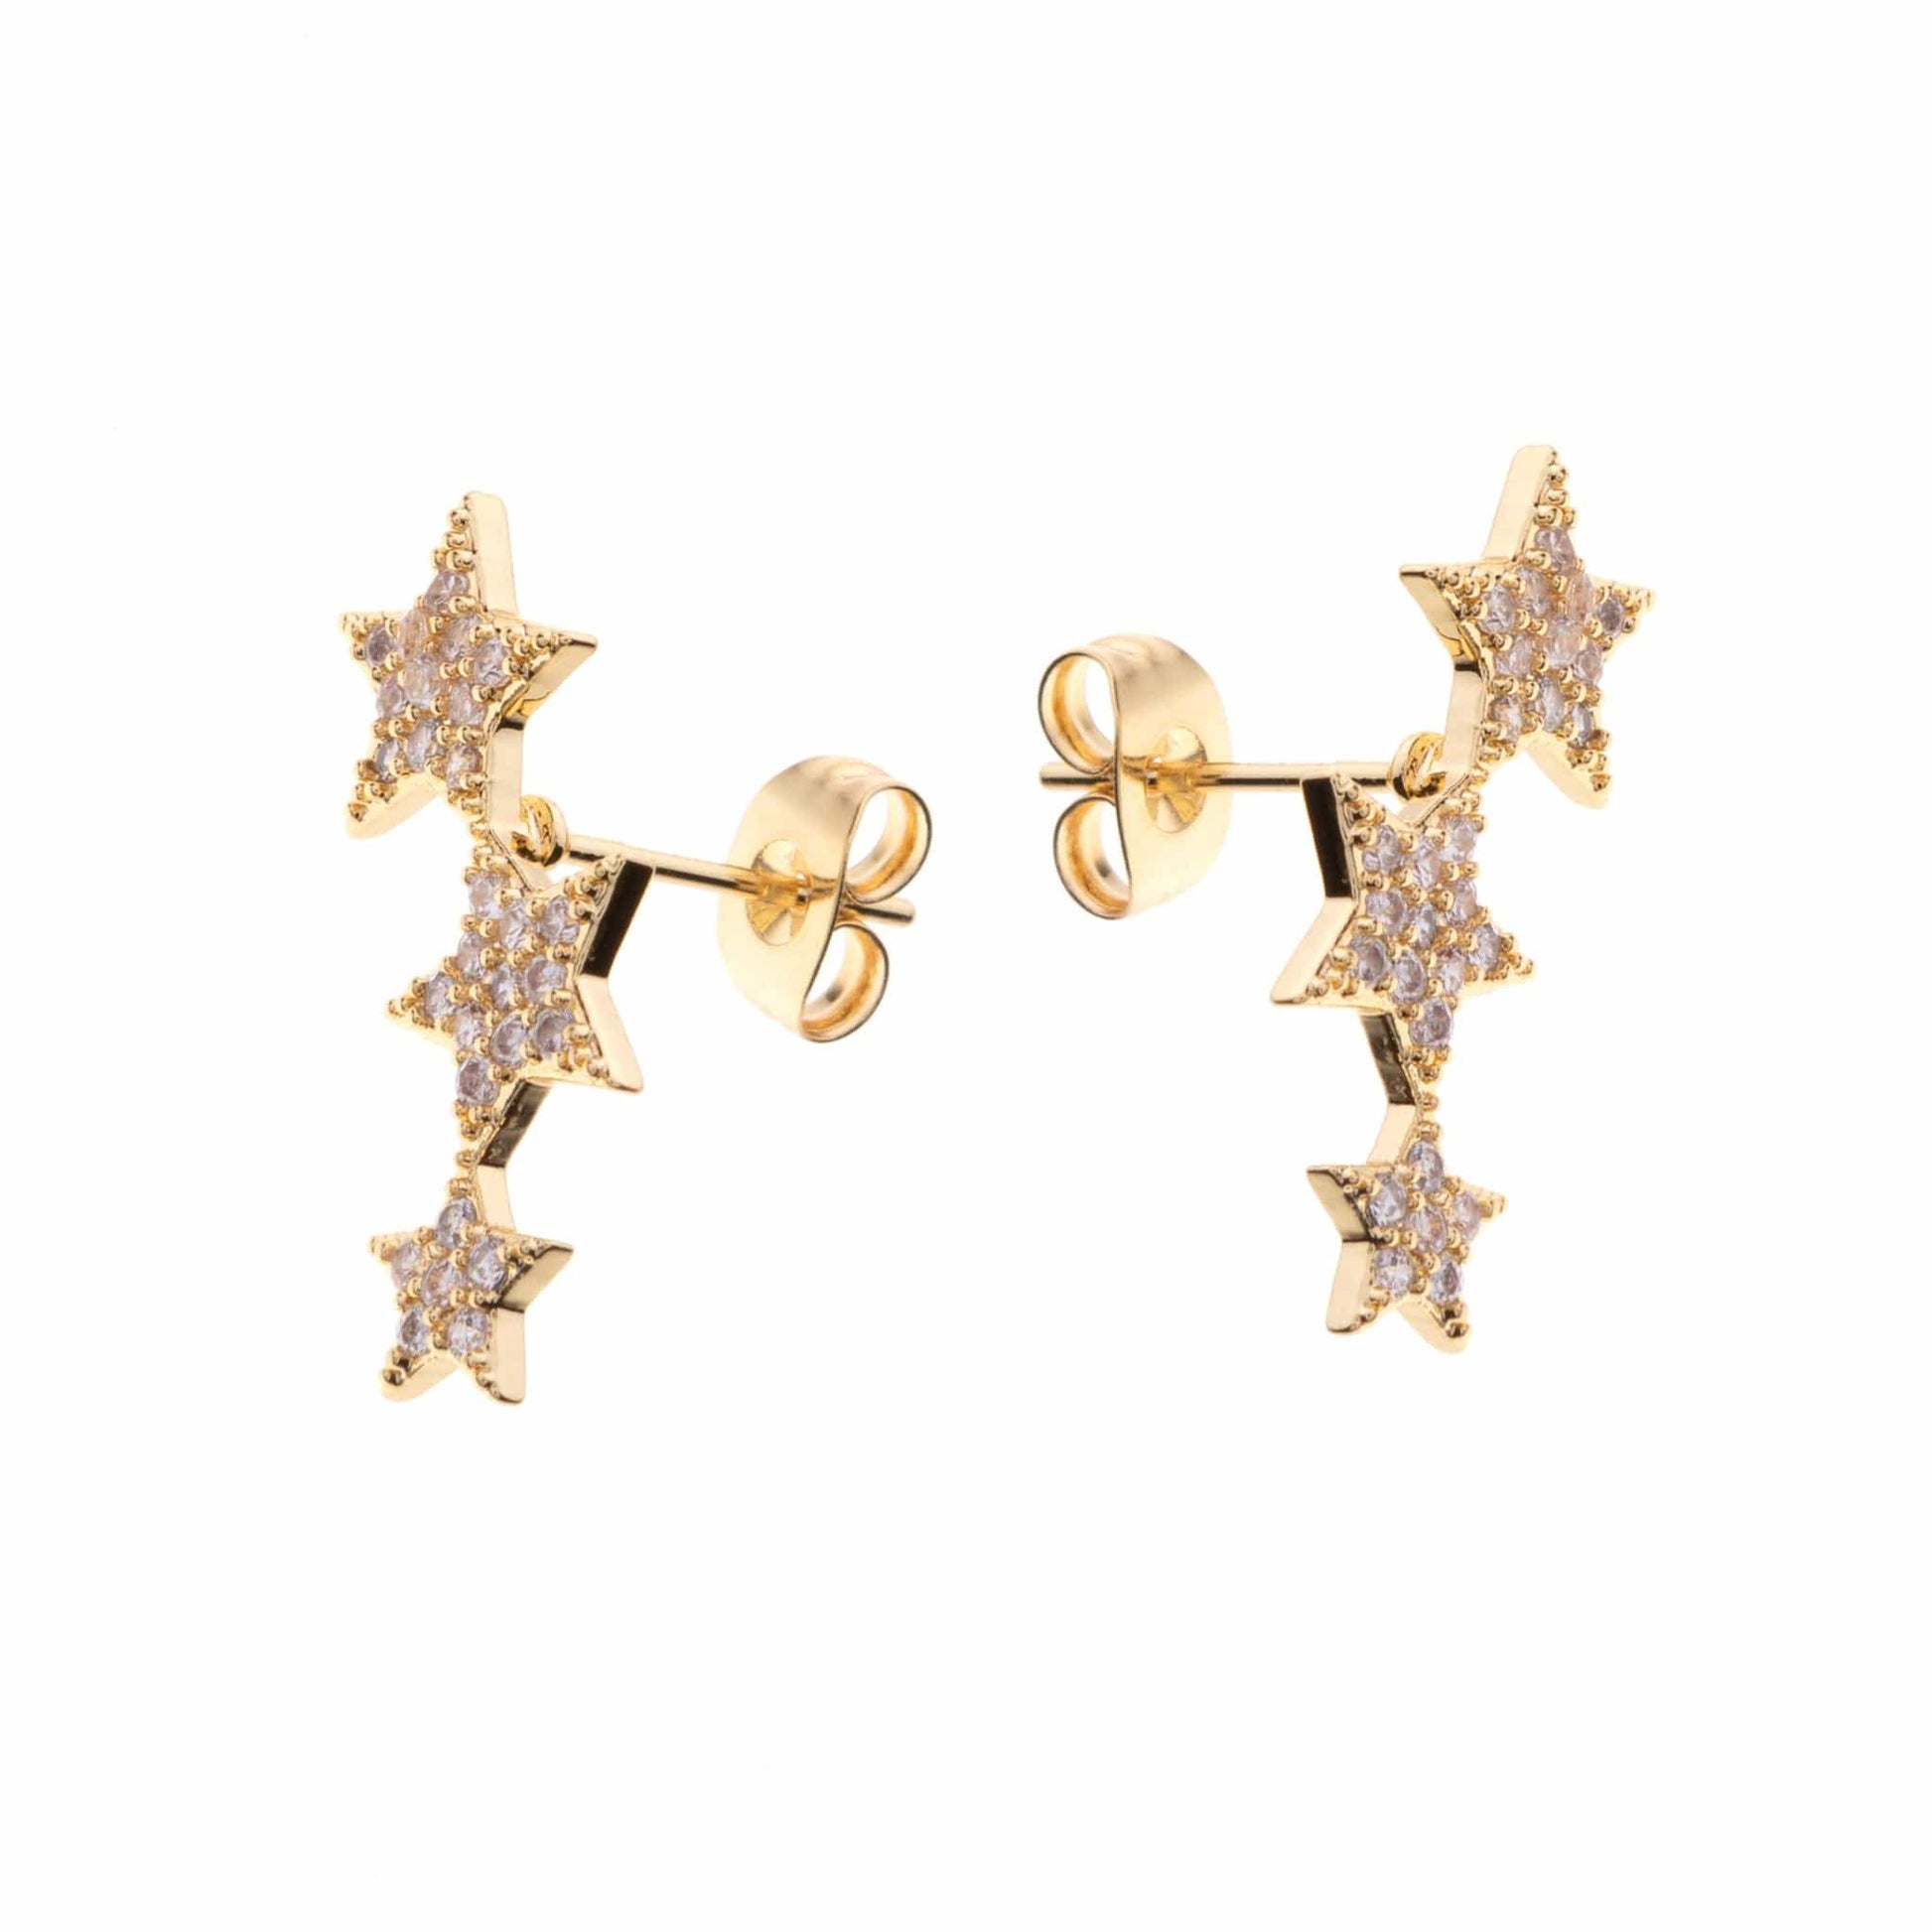 Triple diamante star stud earrings